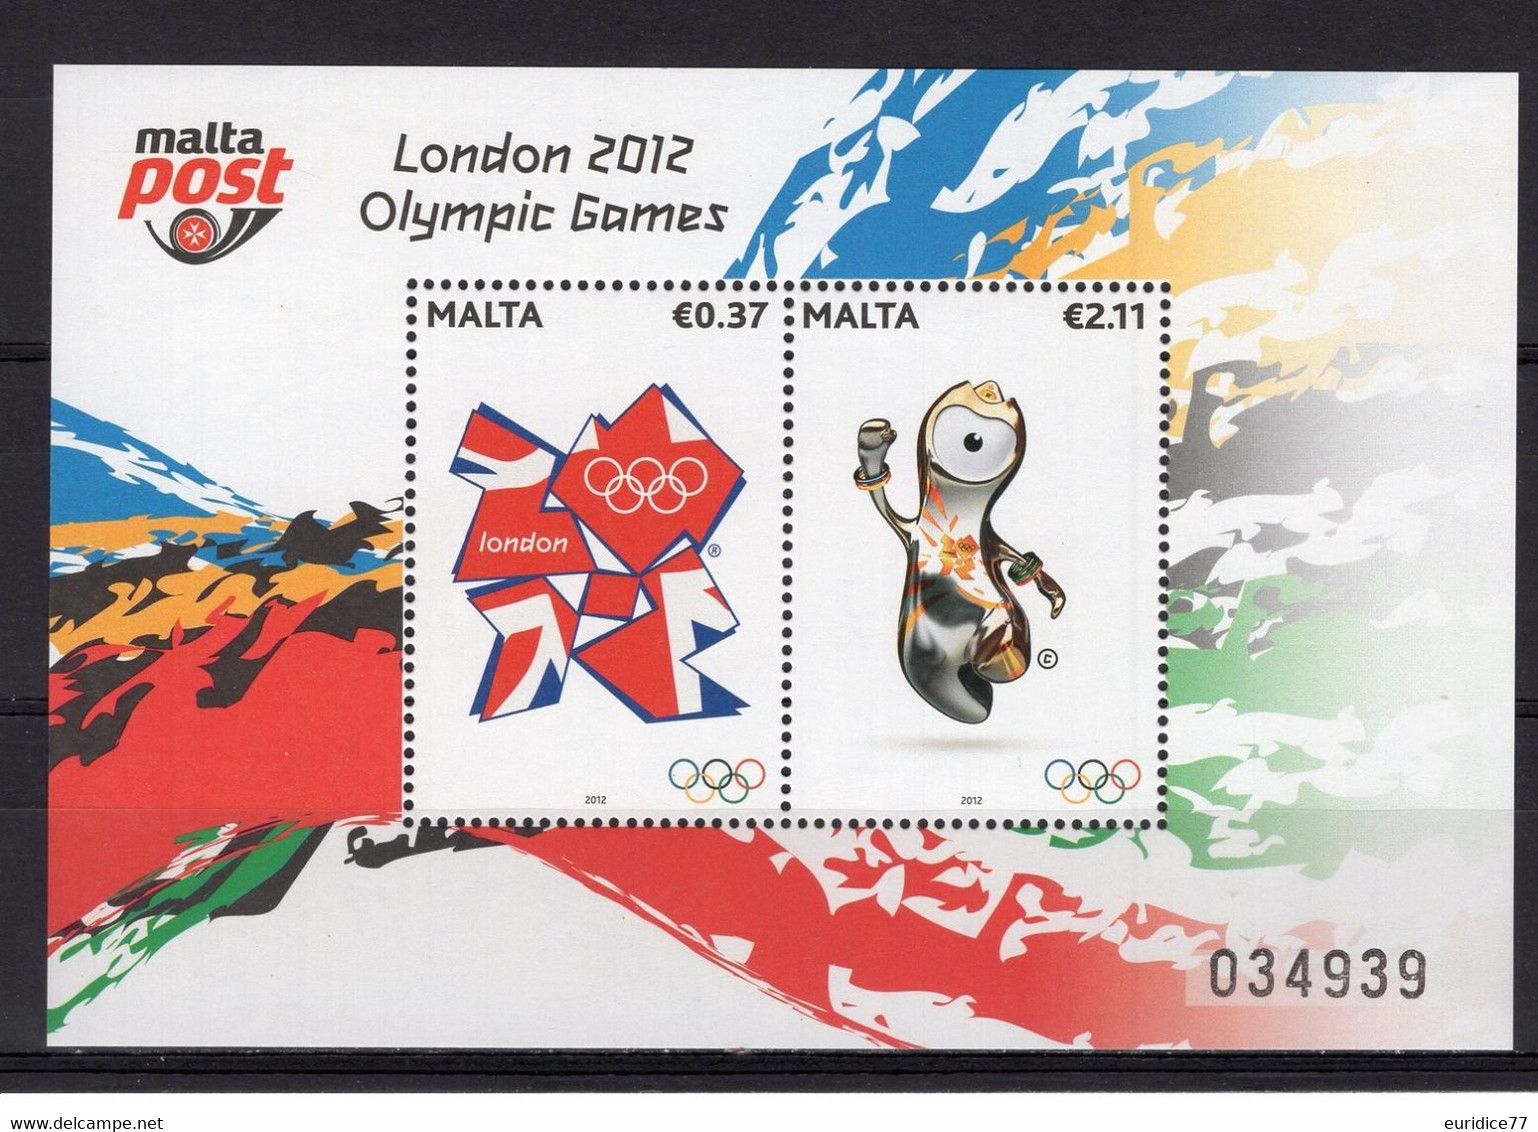 Malta 2012 - London Olympic Games 2012 Souvenir Sheet Mnh - Verano 2012: Londres